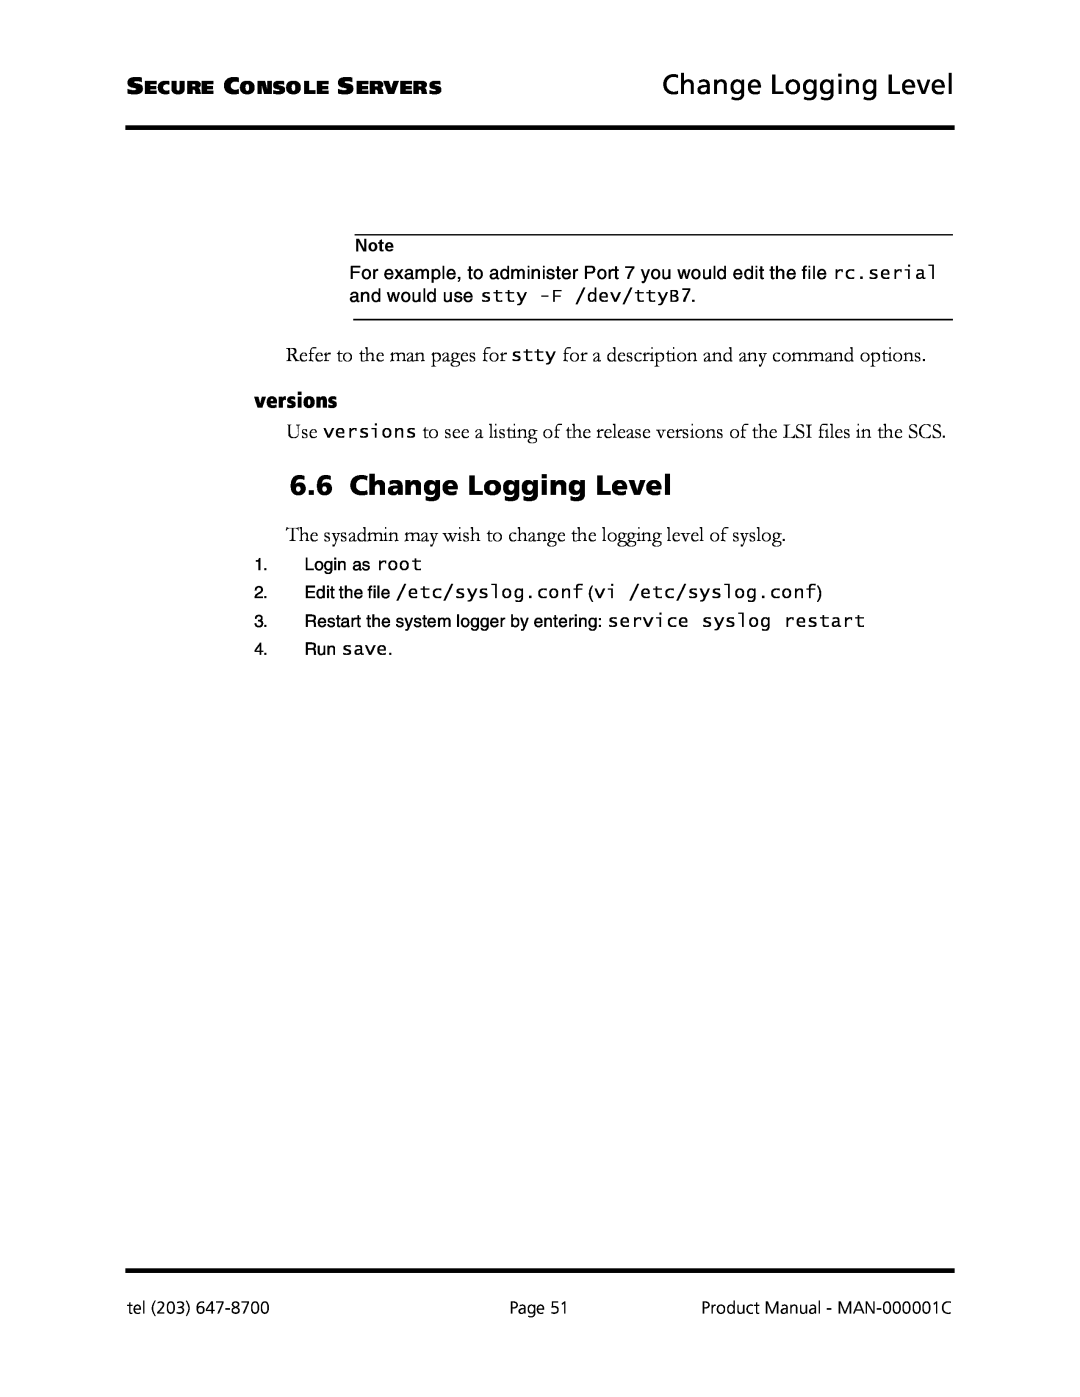 Logical Solutions SCS-R manual Change Logging Level, versions 